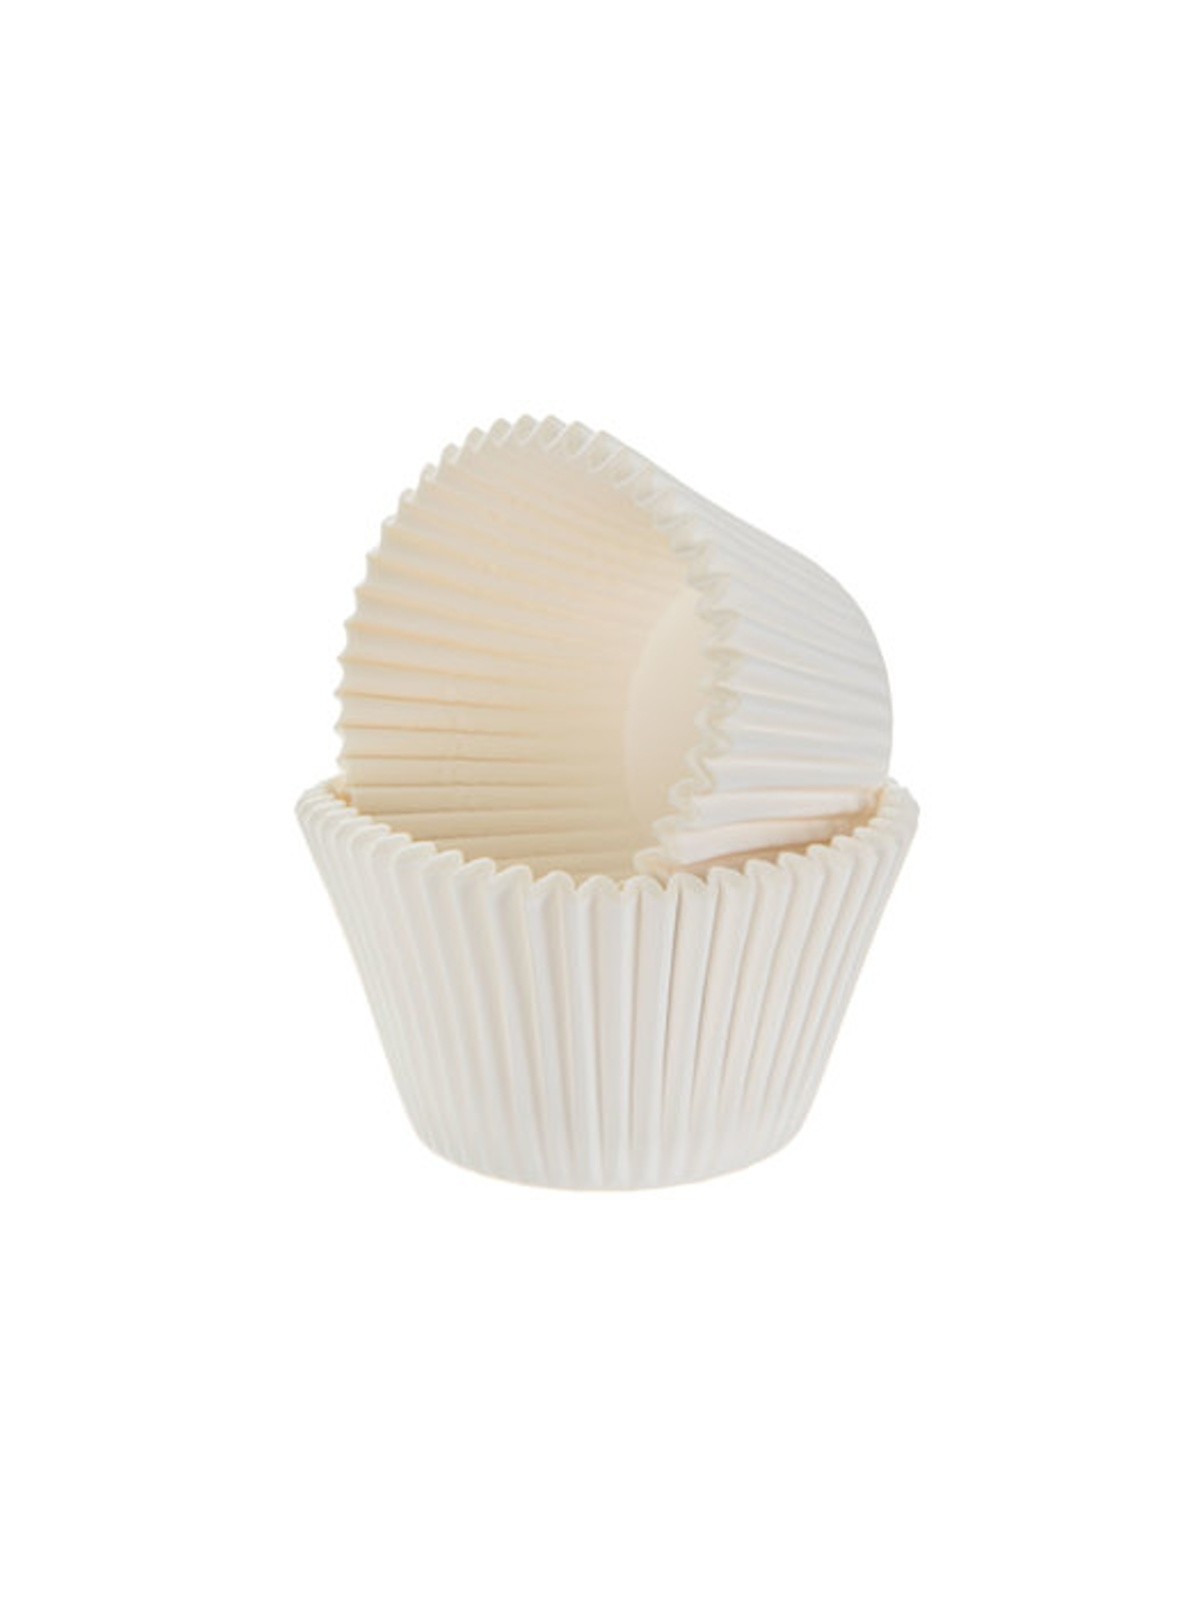 Decora MINI Cupcakes 2 x 1,5 cm - weiß - 70-80 Stück